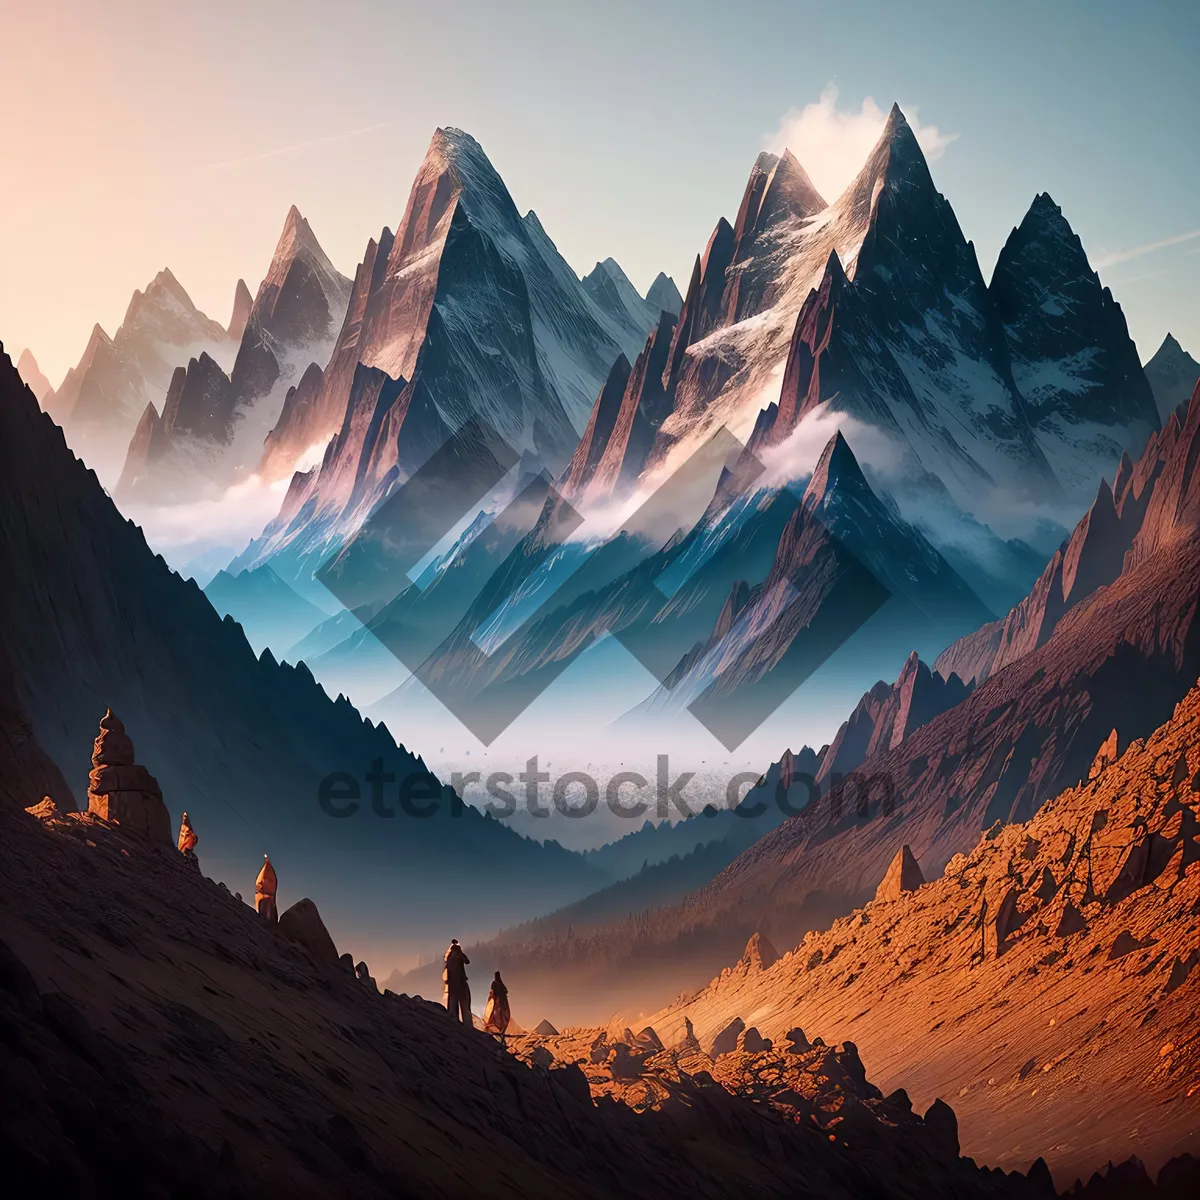 Picture of Rocky Valley Majestics: A Scenic Alpine Mountain Landscape